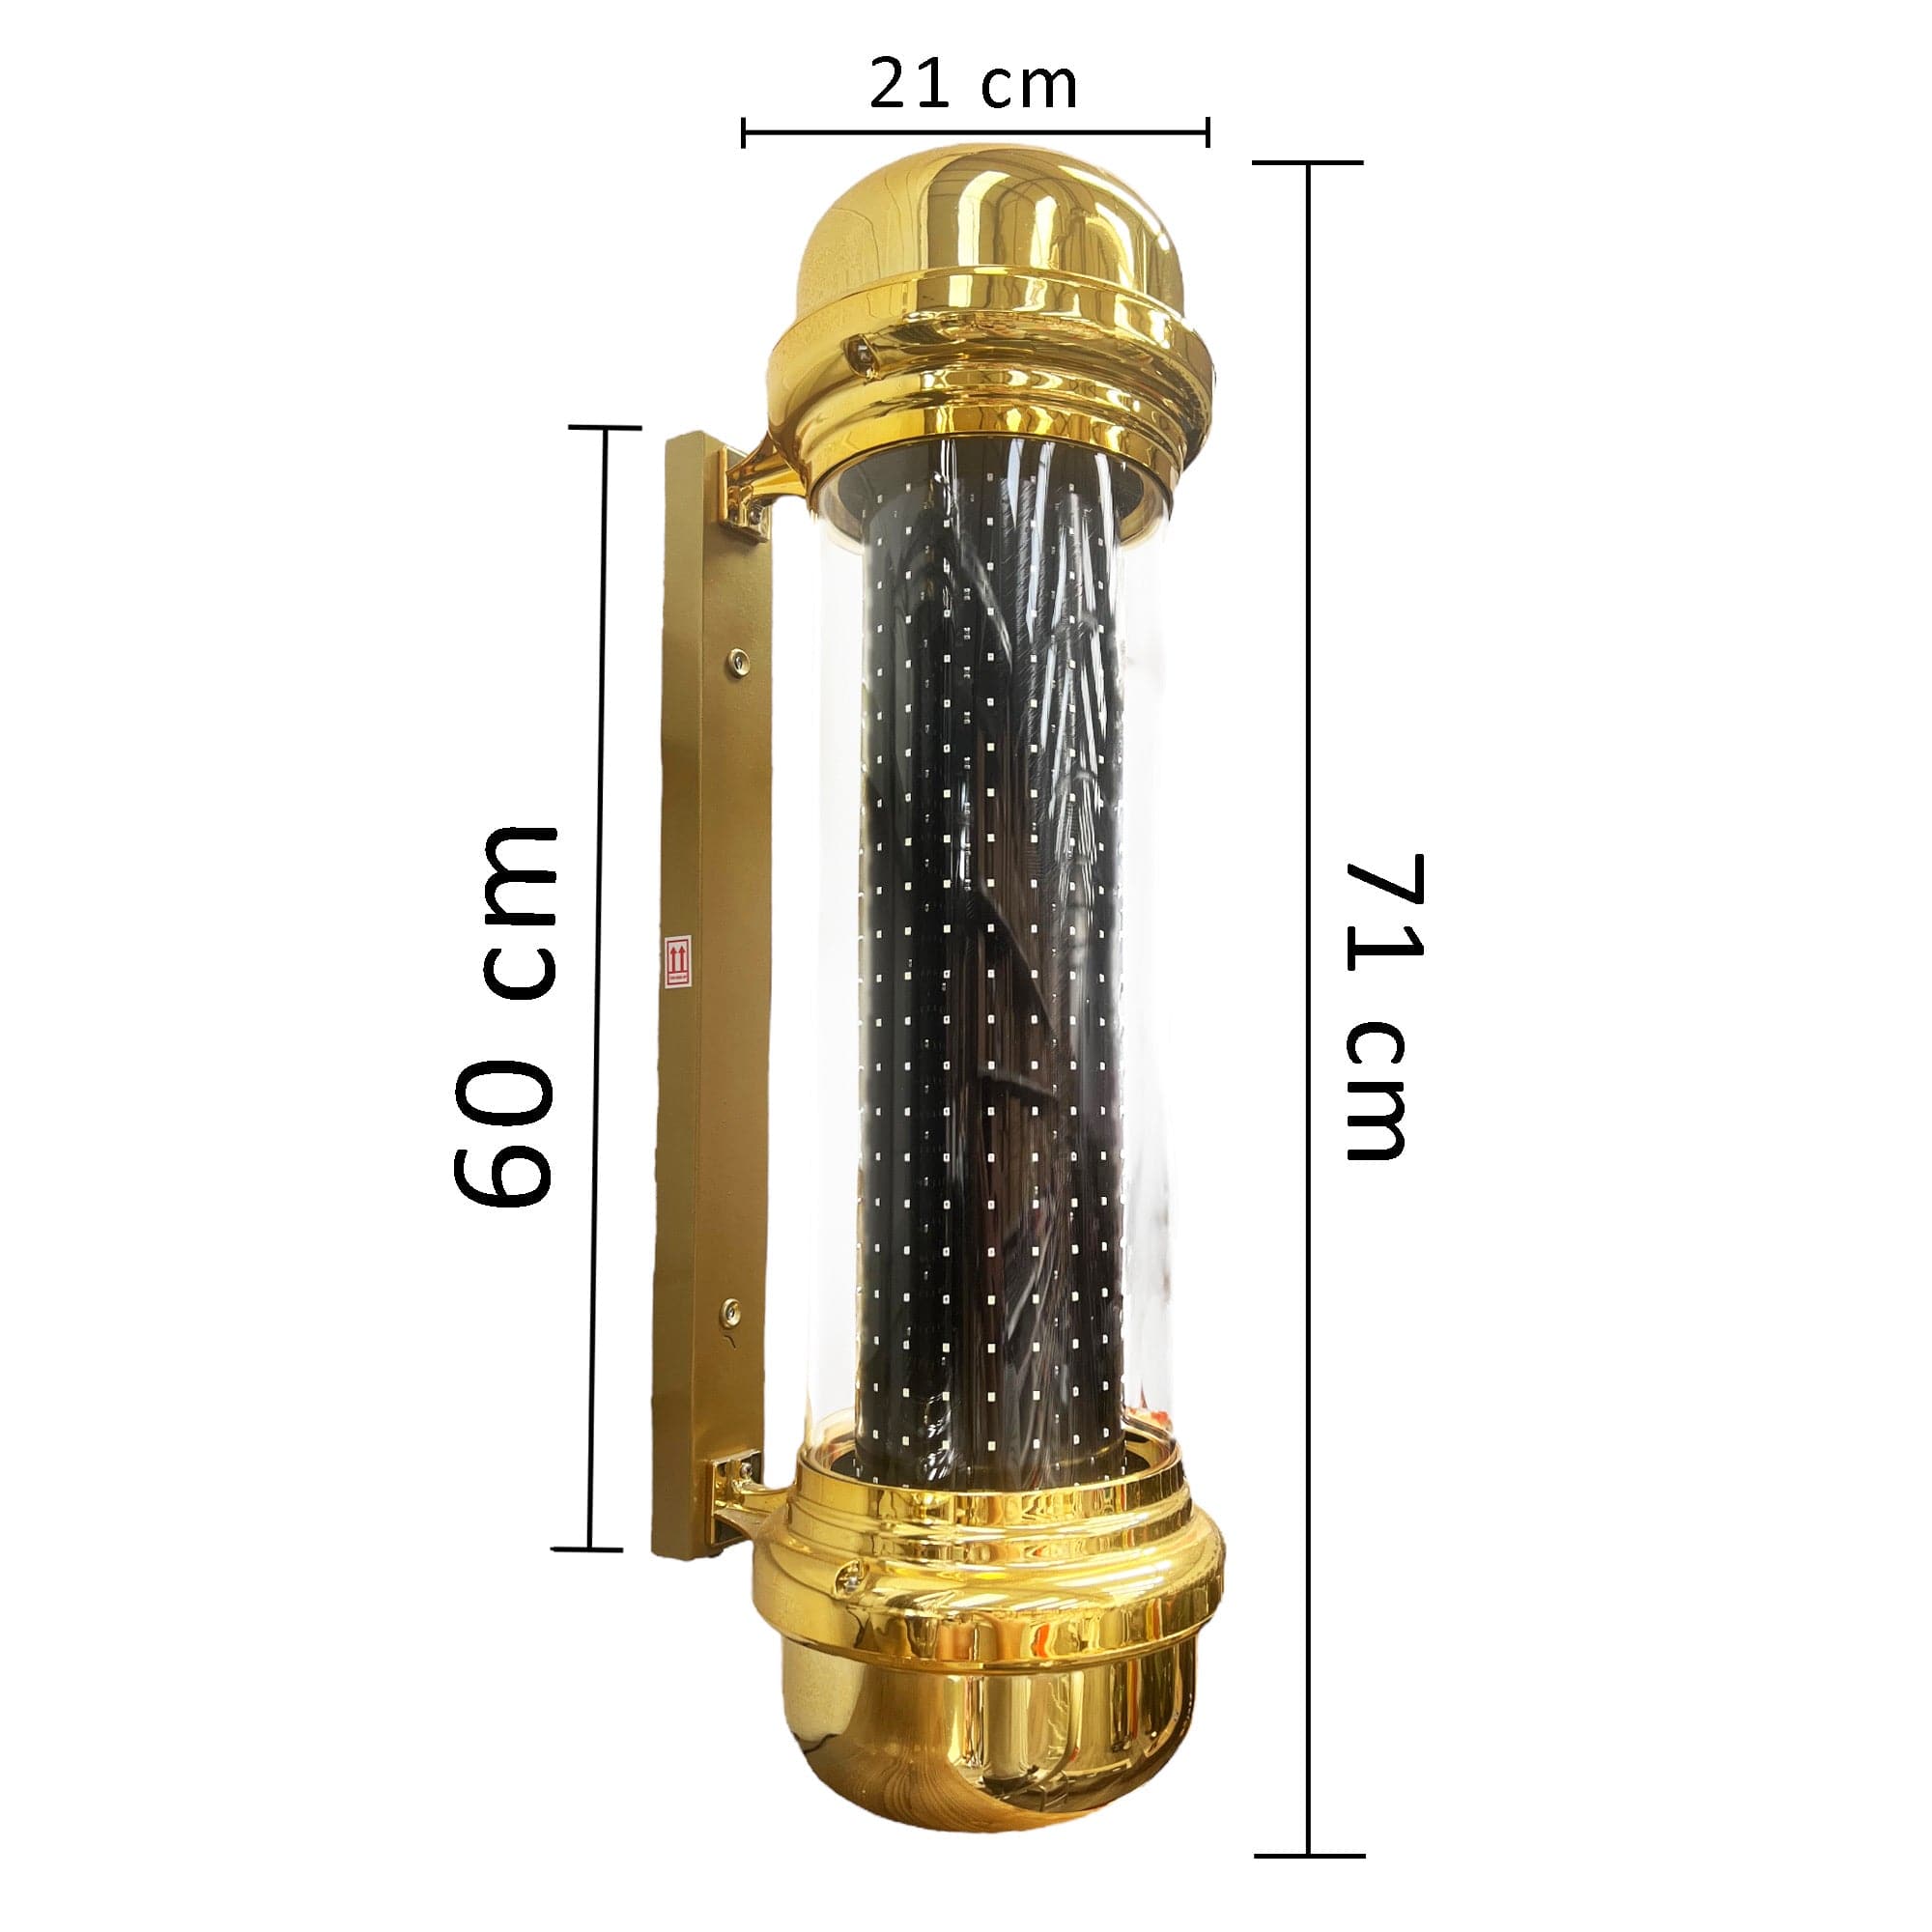 Gabri - Barber Pole Led Light 5 Modes With Remote Control (Gold) 70cm